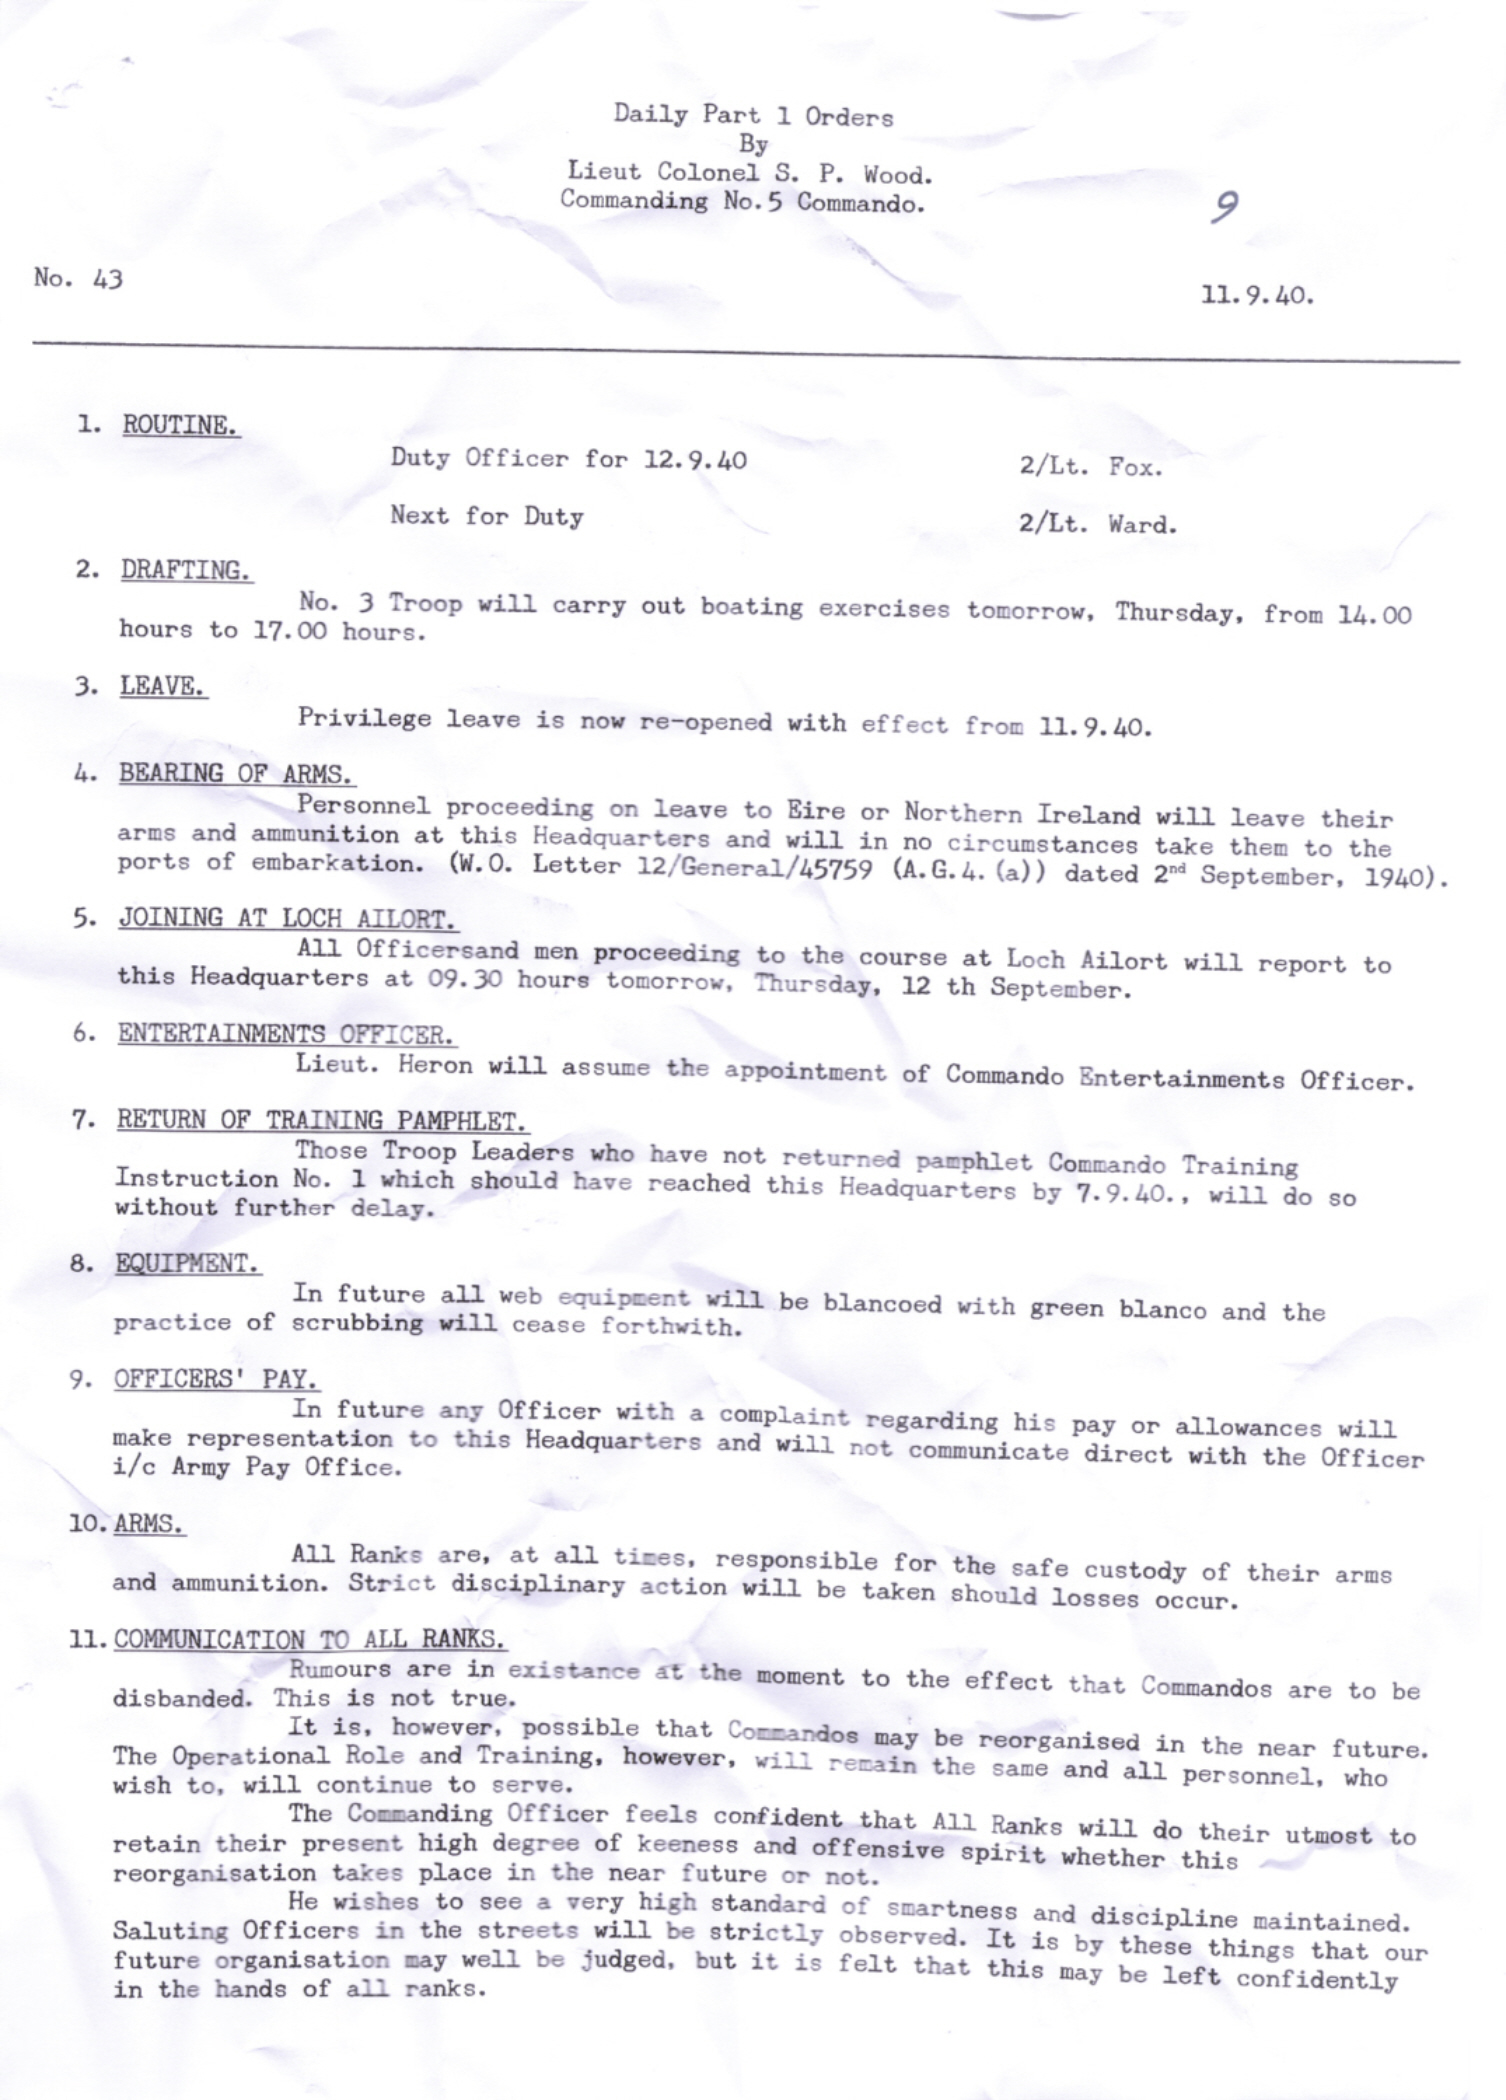 Daily Part I Orders, No5 Cdo, 11 Sept 1940